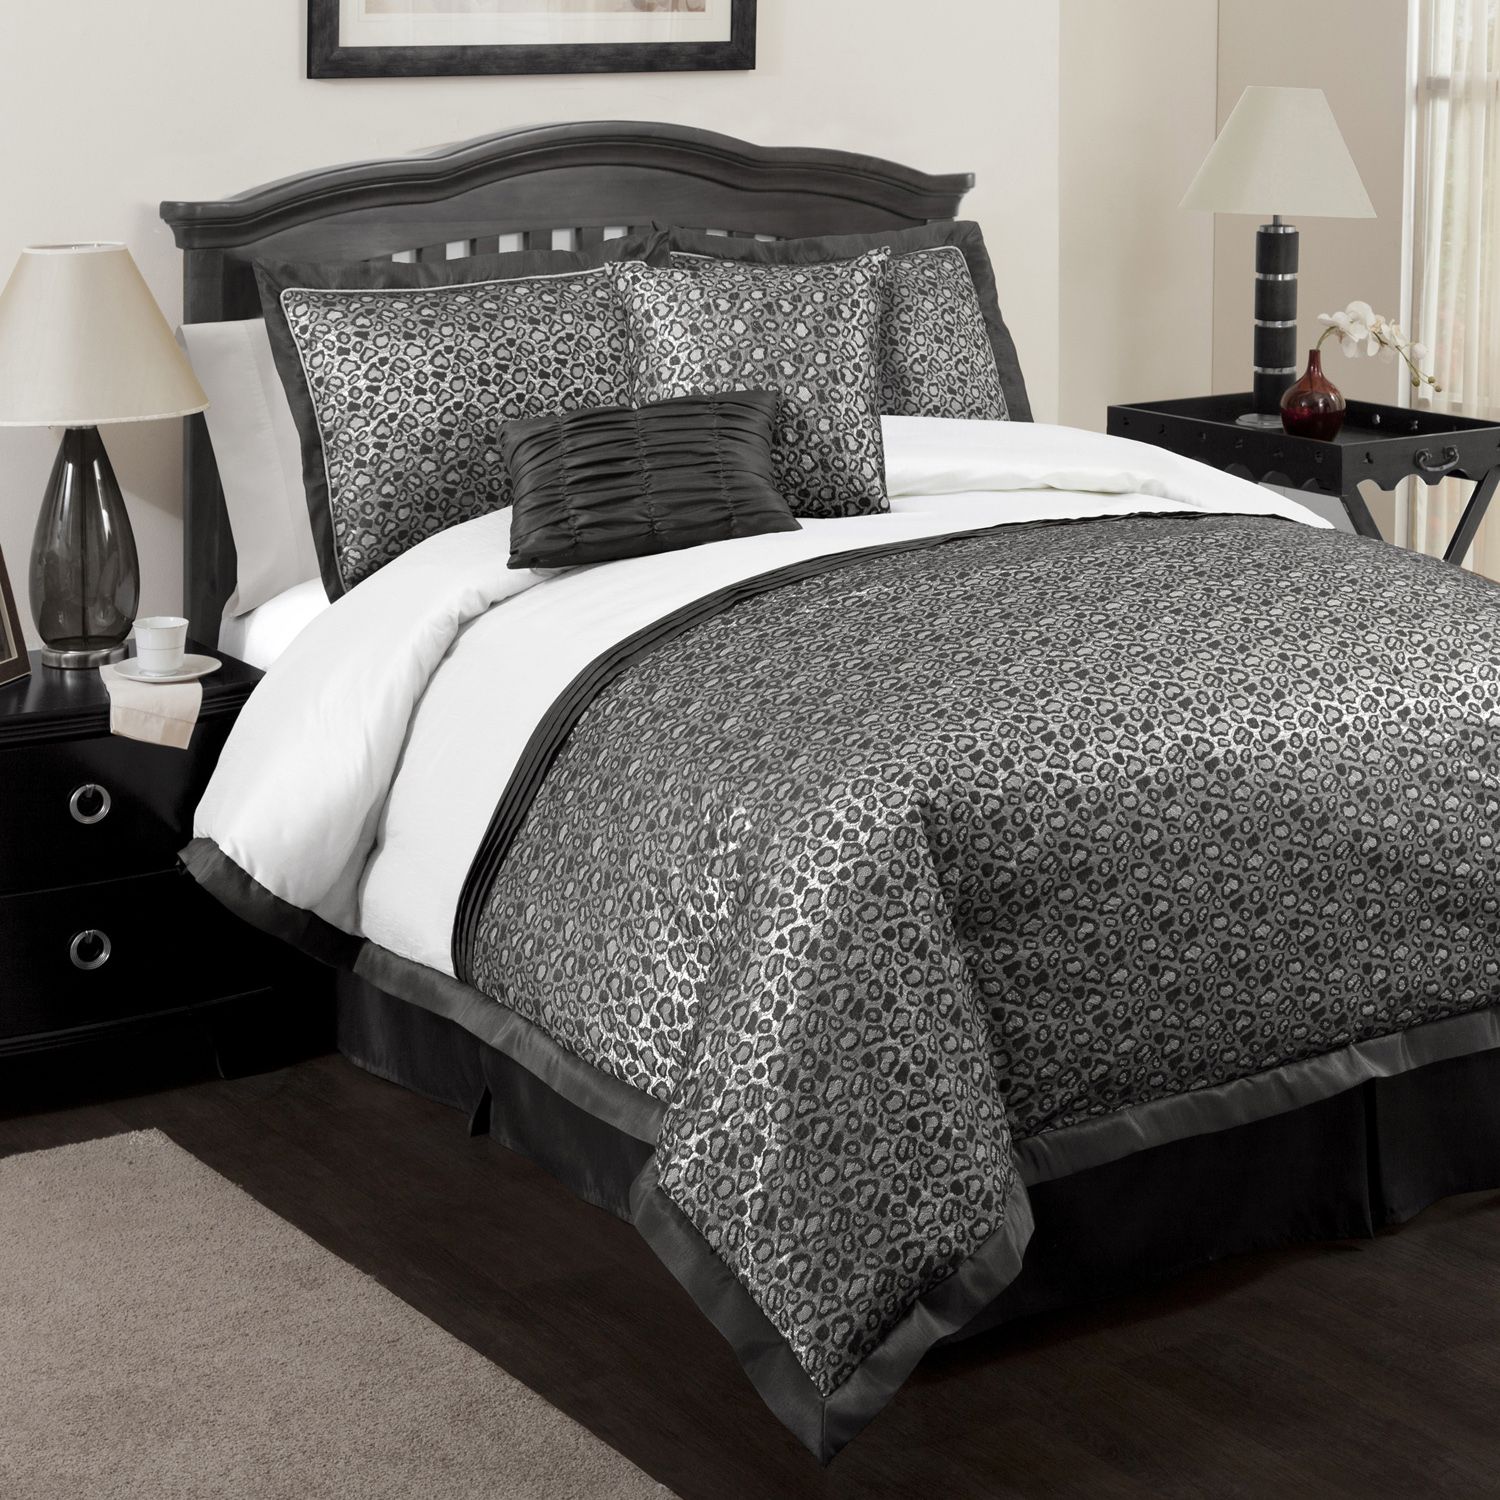 Triangle Home Fashions Leopard Black 6 Piece Comforter Set: King Comfo